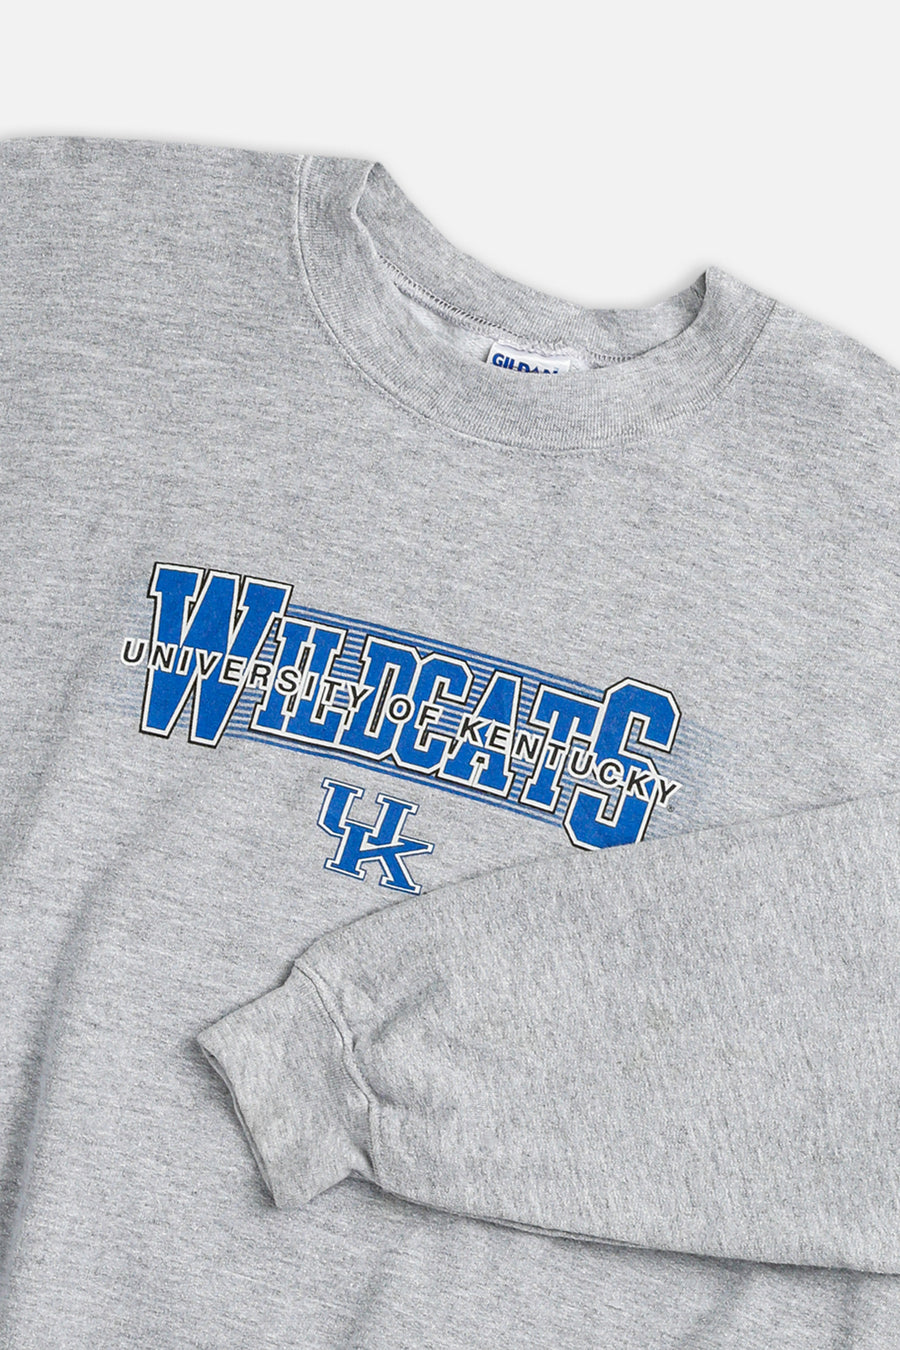 Vintage Kentucky University Sweatshirt - L